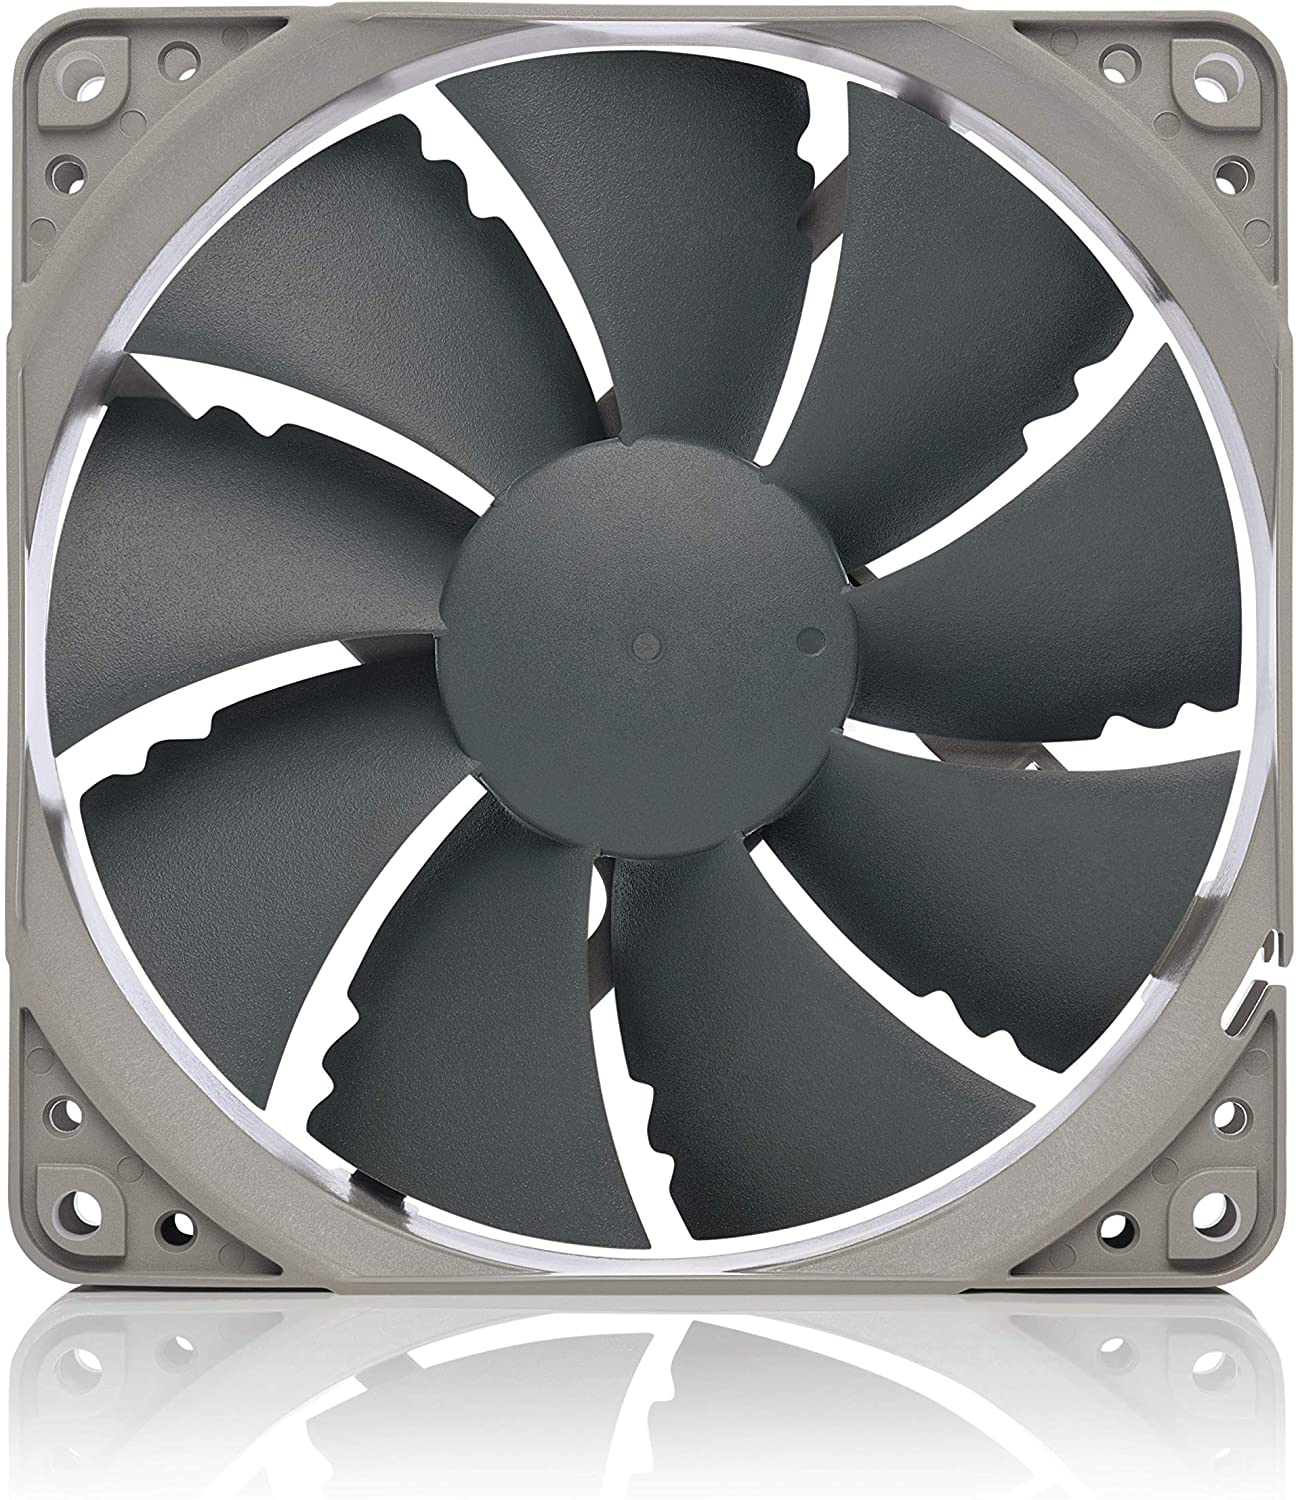 Noctua NF-P12 redux-1700 PWM, High Performance Cooling Fan, 4-Pin, 1700 RPM (120mm, Grey)